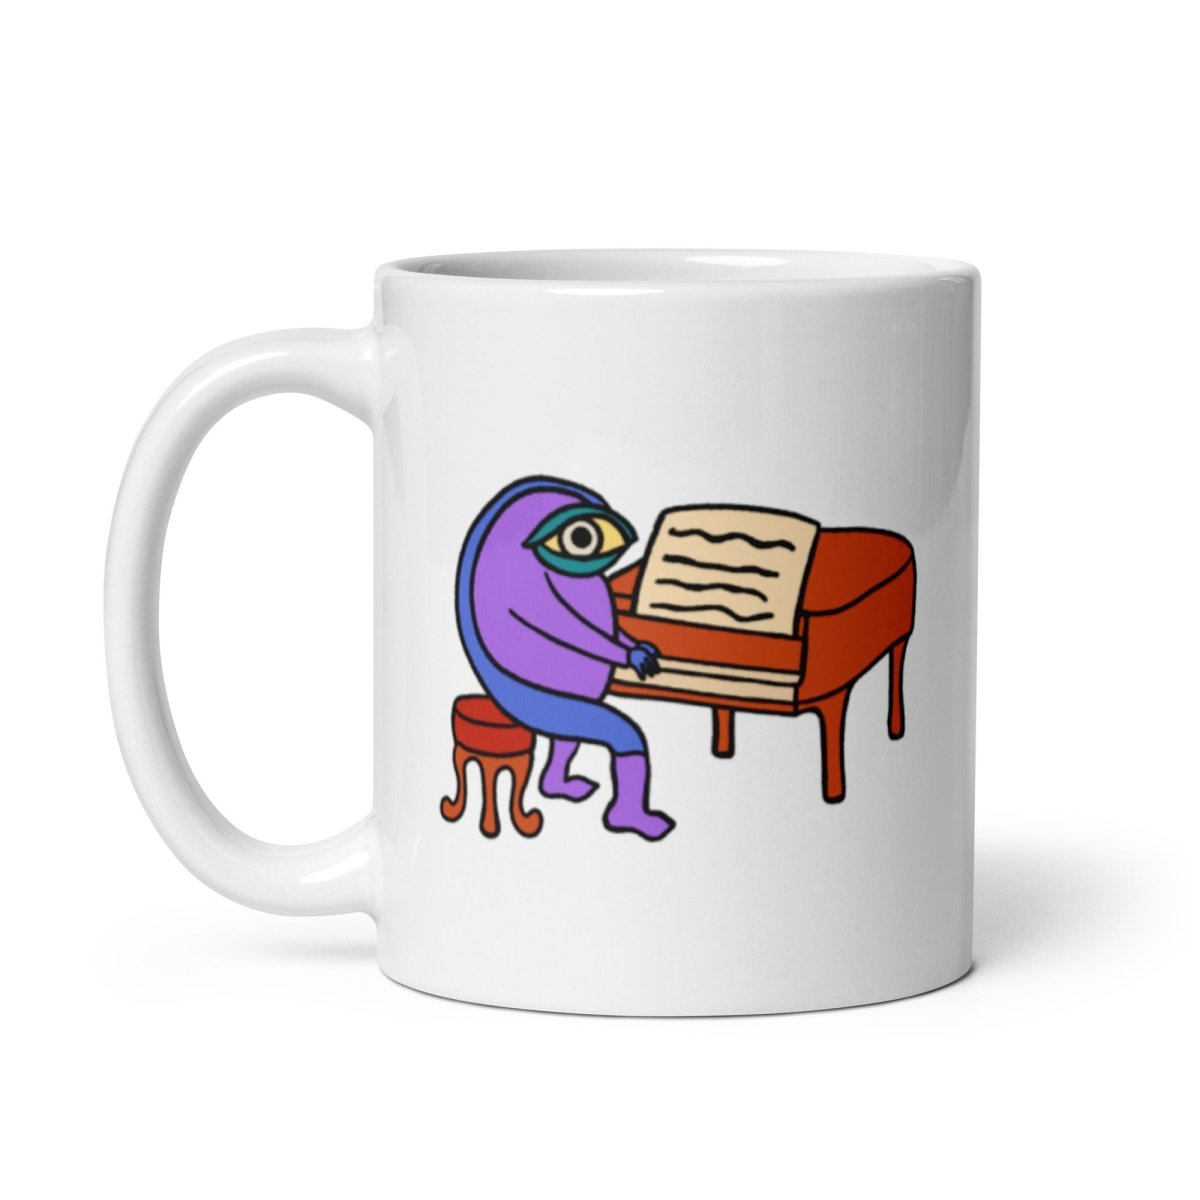 Master pianist cyclops mug - Mug - Pretty Bad Co.